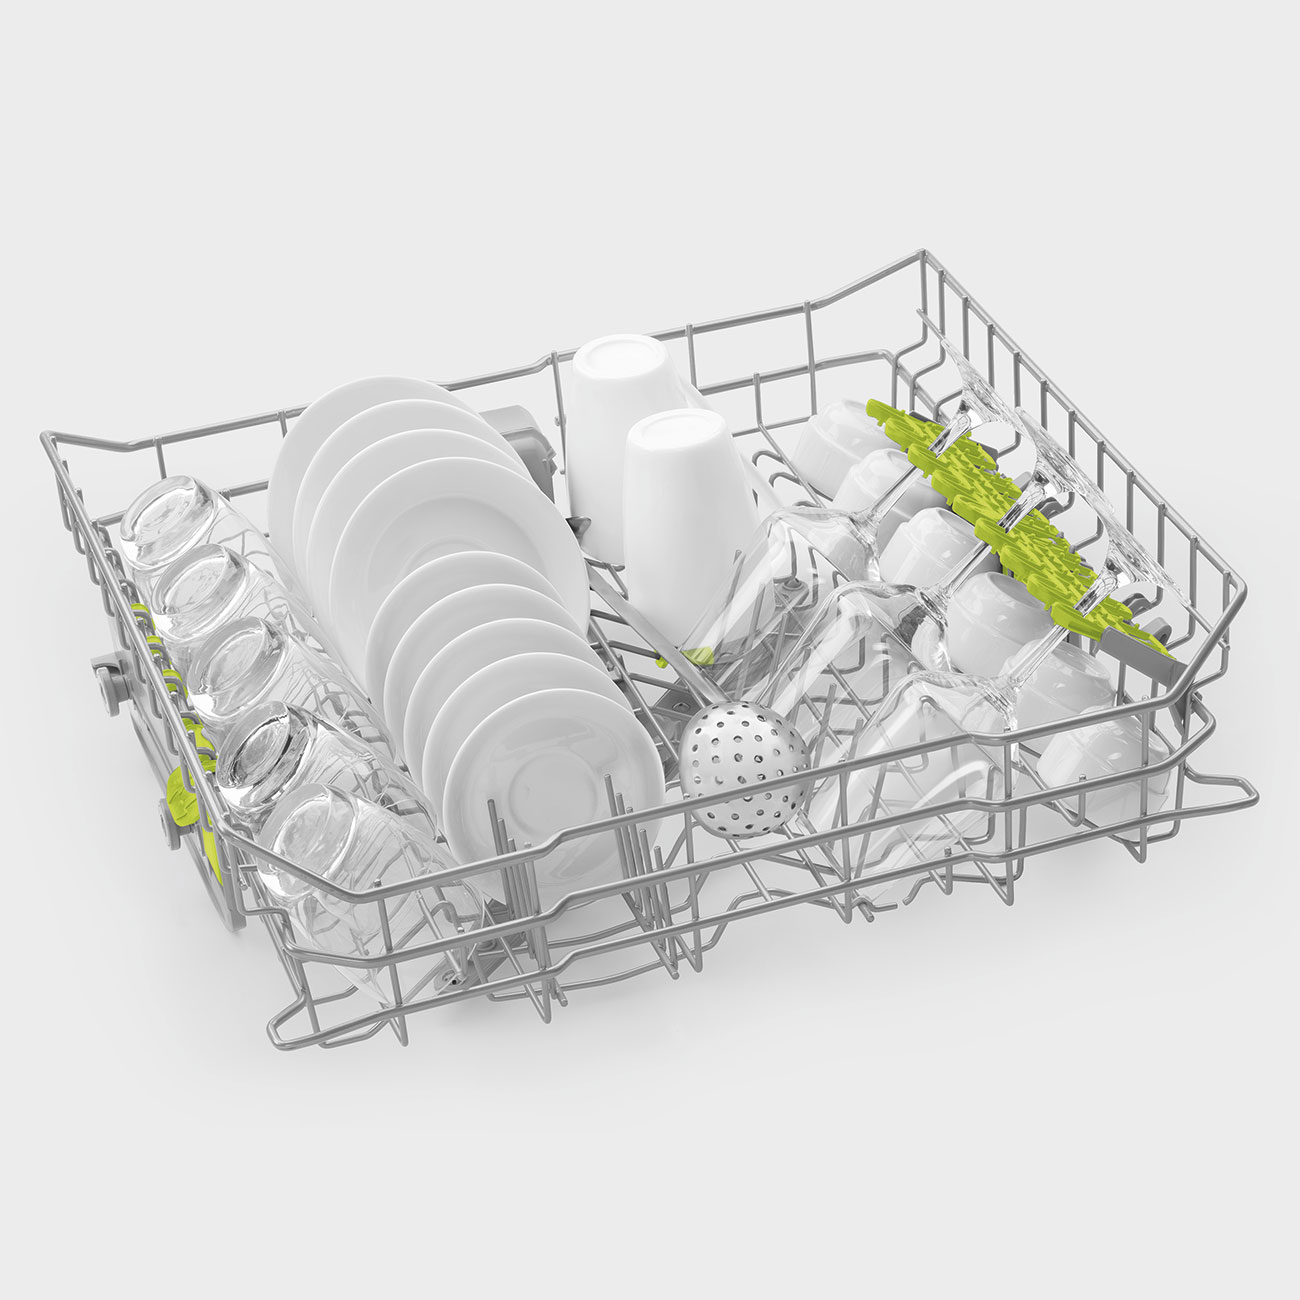 Fully-integrated built-in dishwasher 60 cm Smeg_5